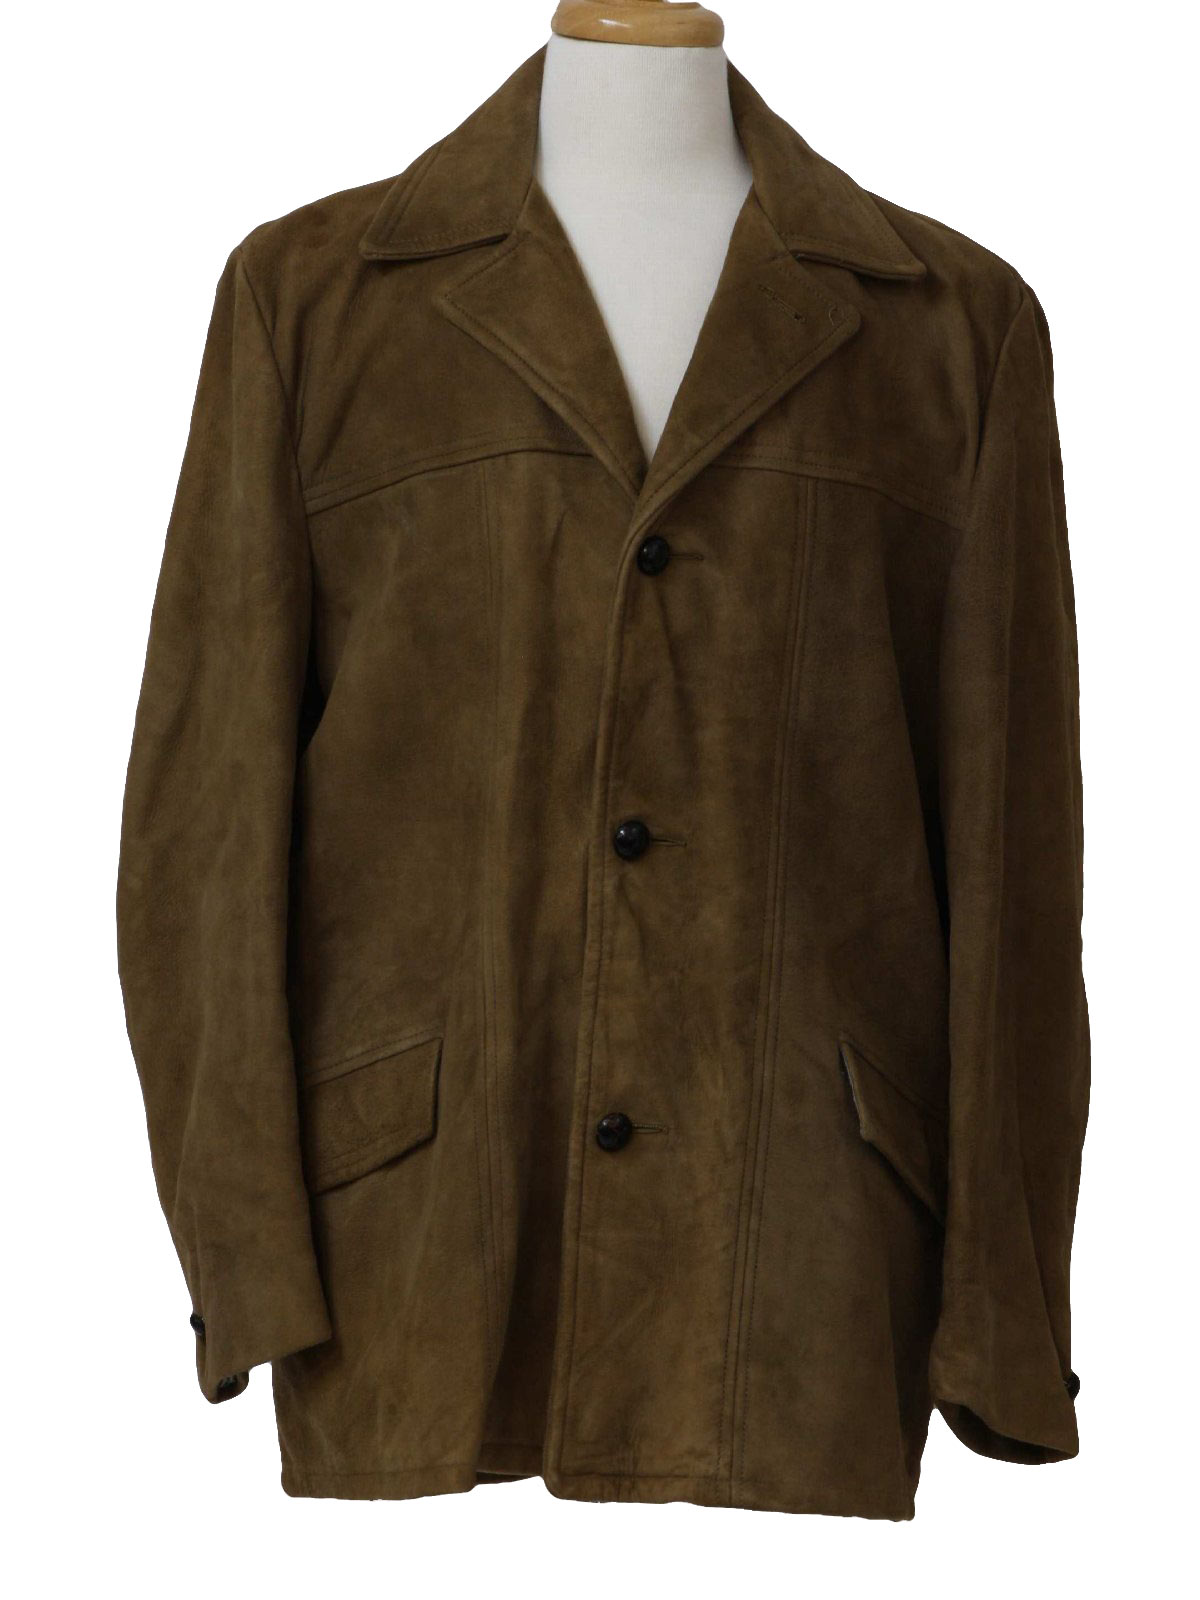 R. Sherman 70's Vintage Leather Jacket: 70s -R. Sherman- Mens dusty tan ...